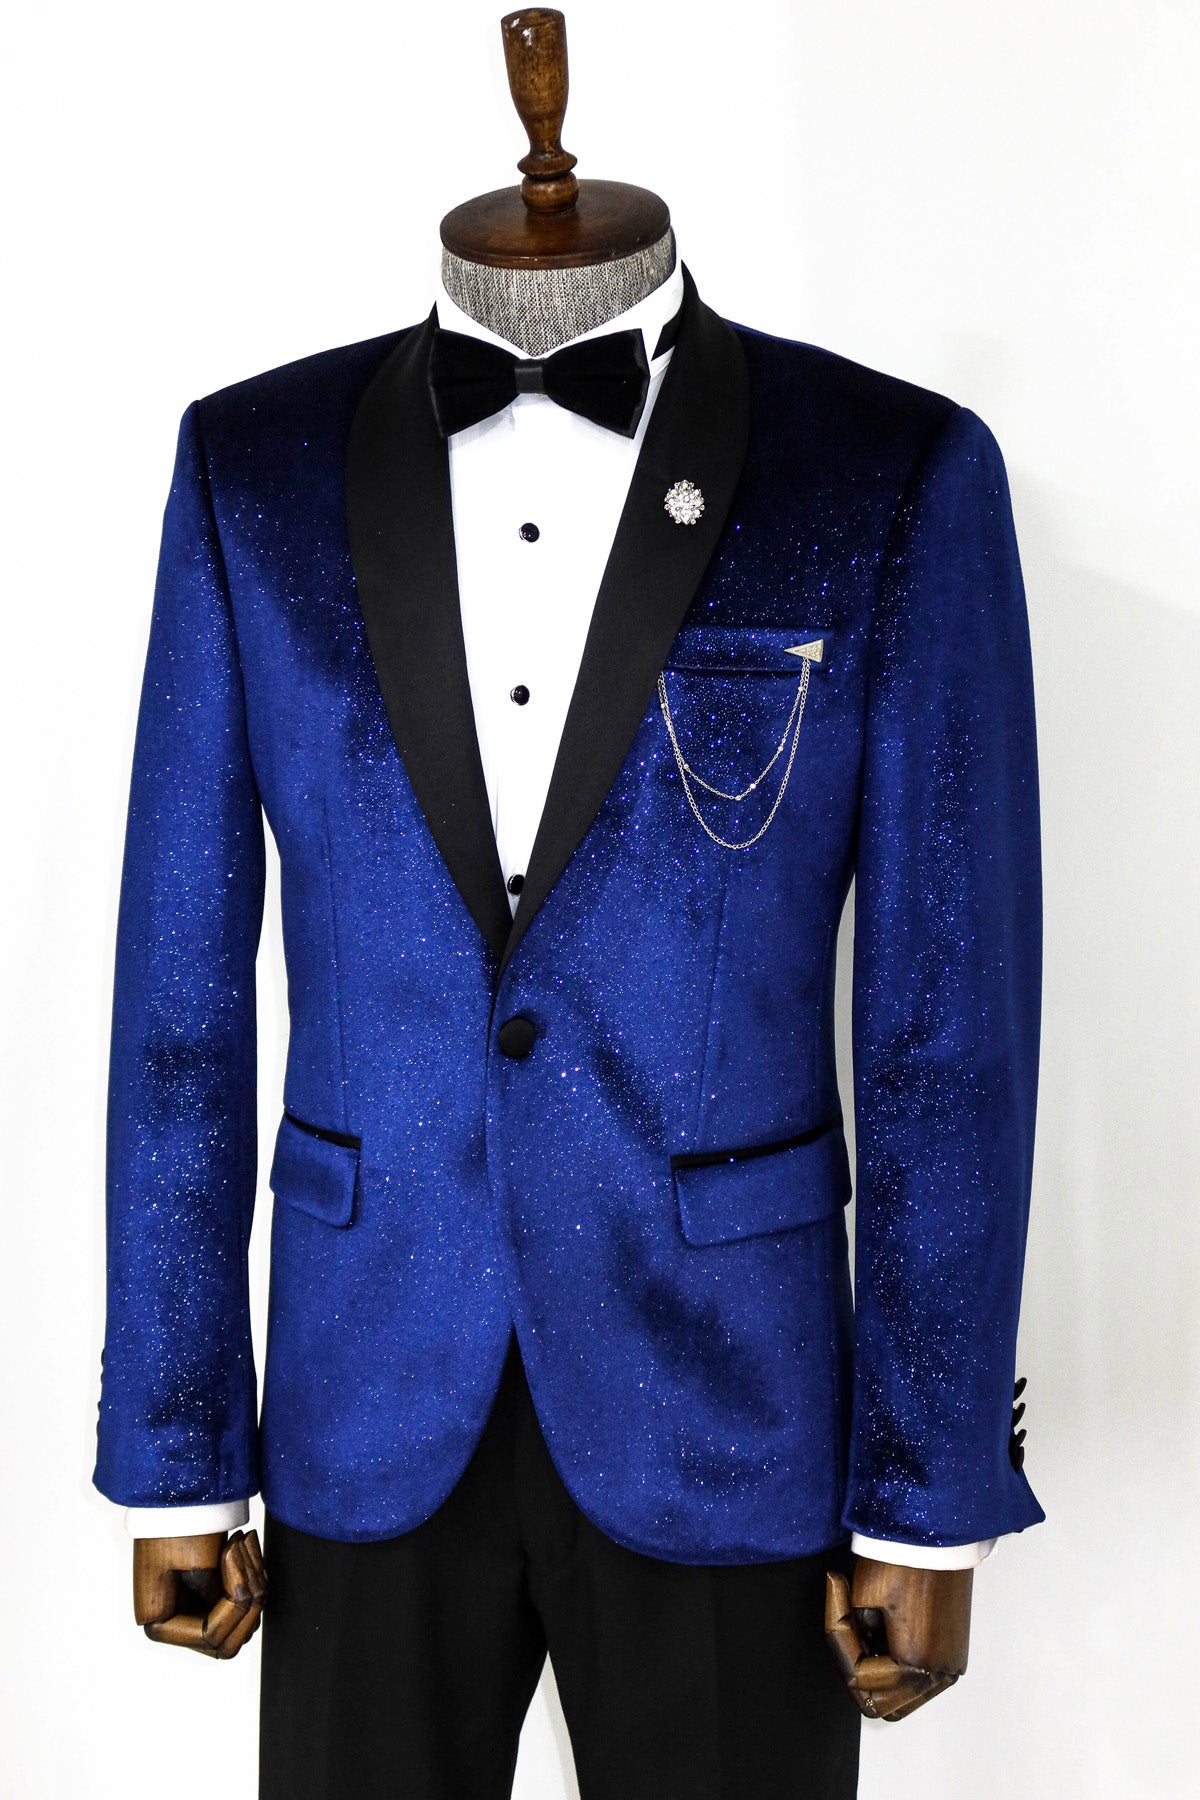 TZ Men's Premium Blue Suit Tuxedo Prom Blazer Jacket